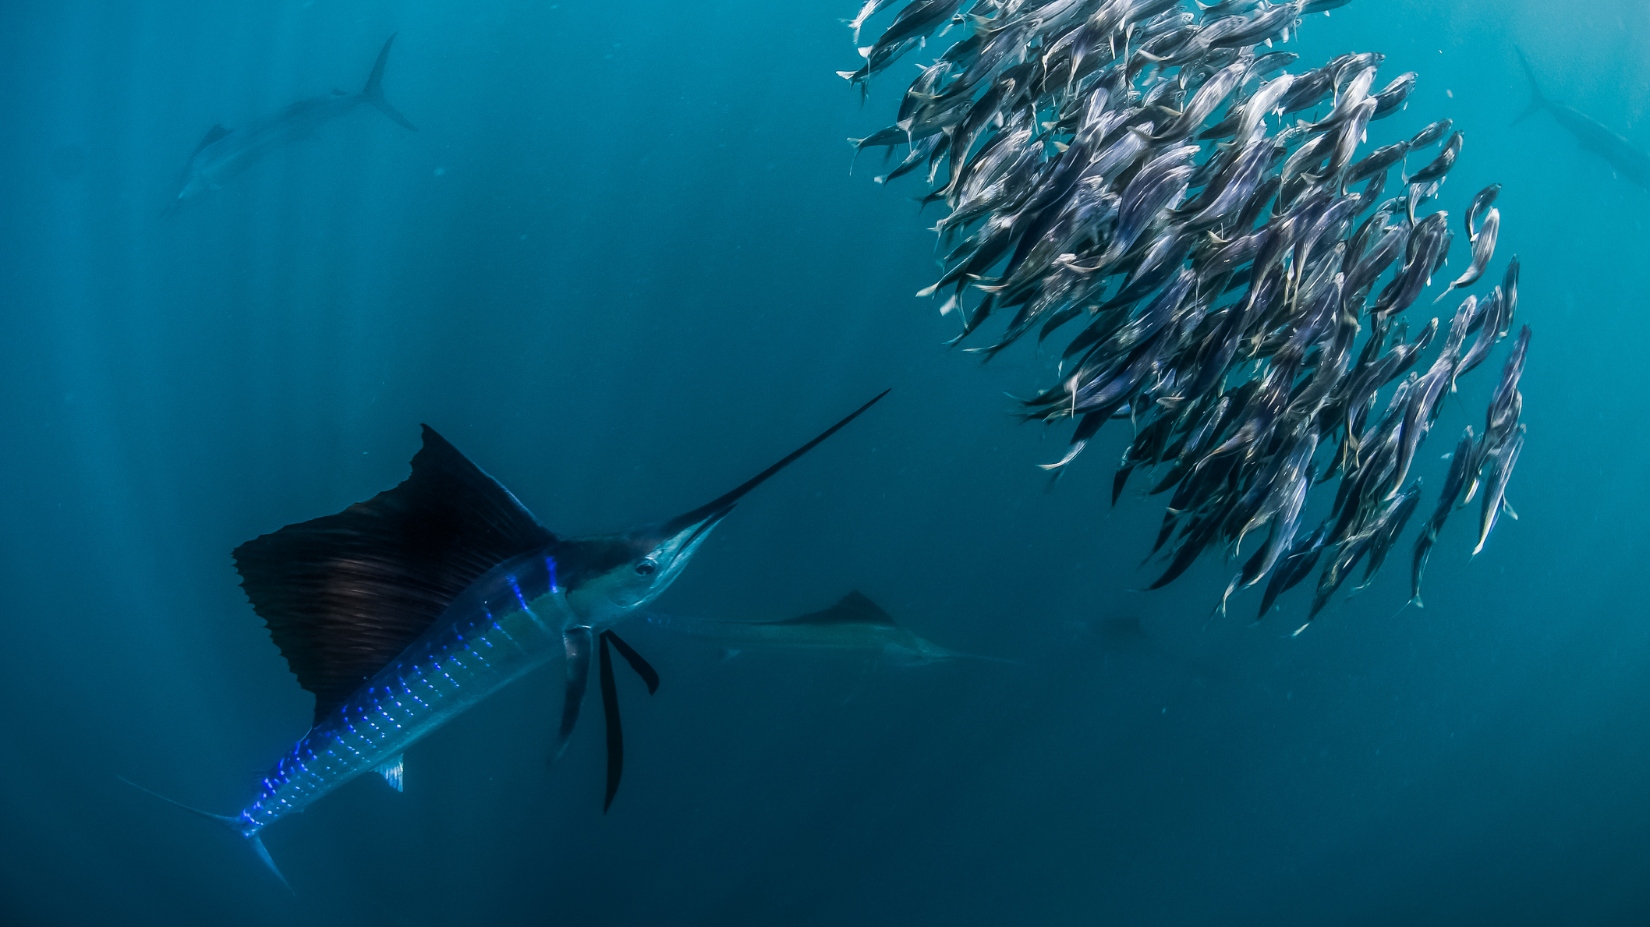 sailfish feeding frenzy underwater